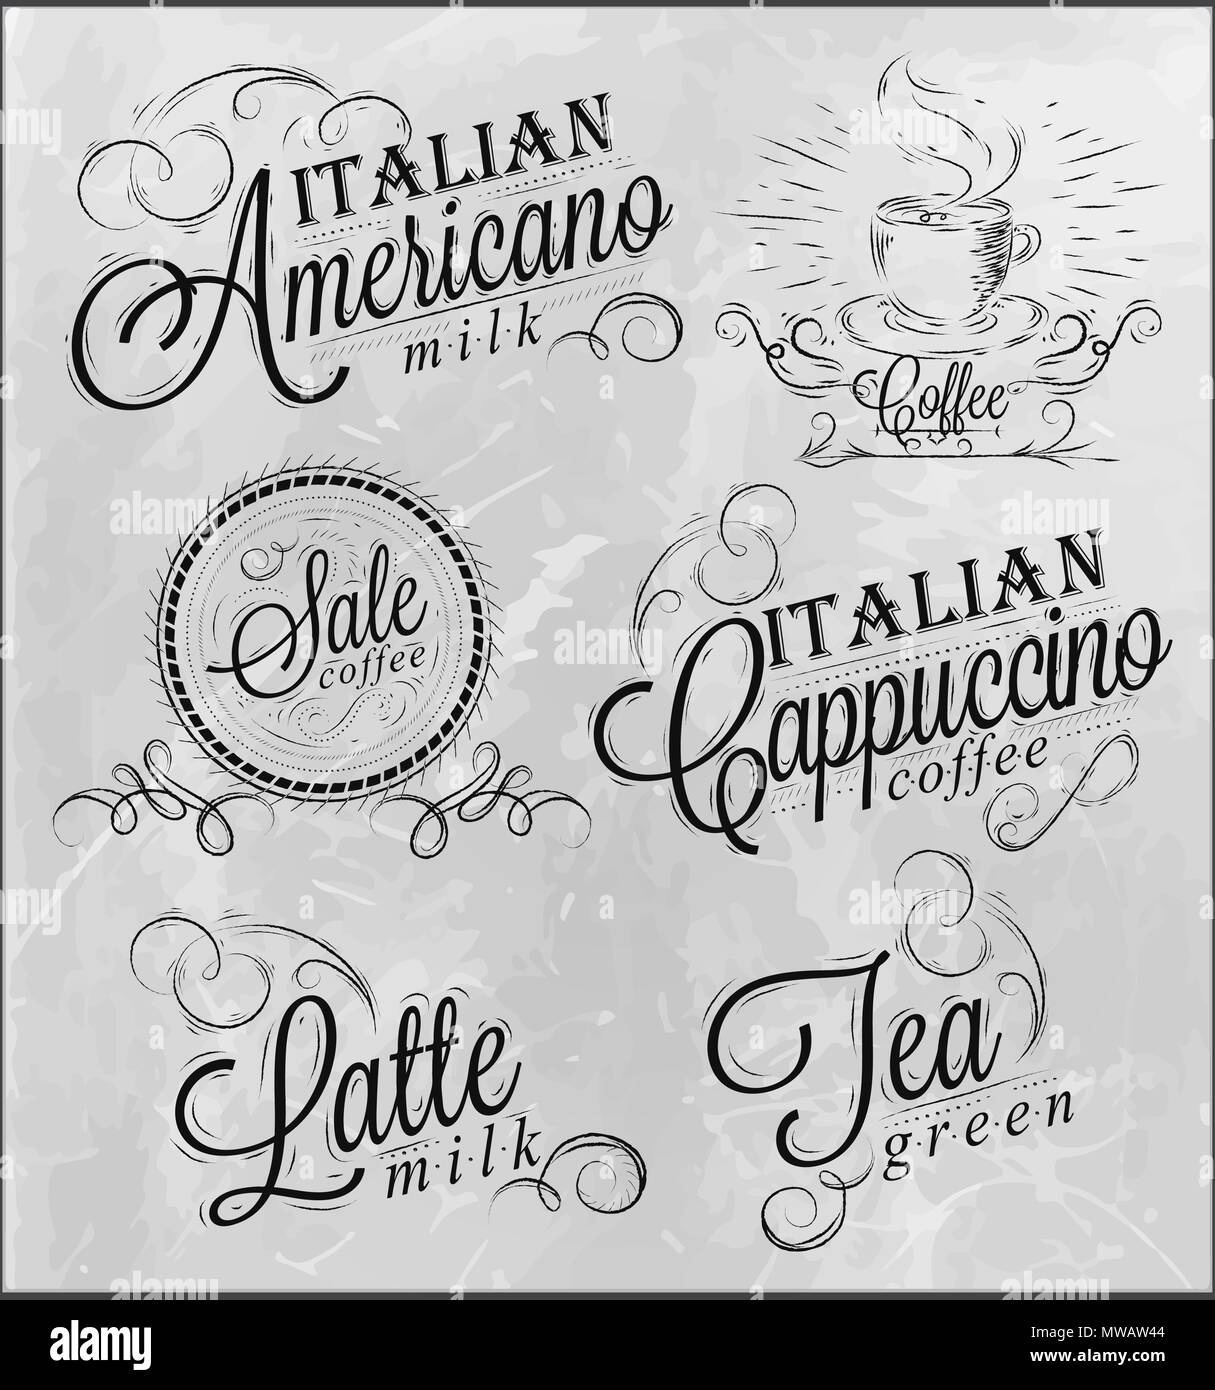 Names of coffee drinks espresso, latte, stylized inscriptions in coal on a blackboard Stock Vector